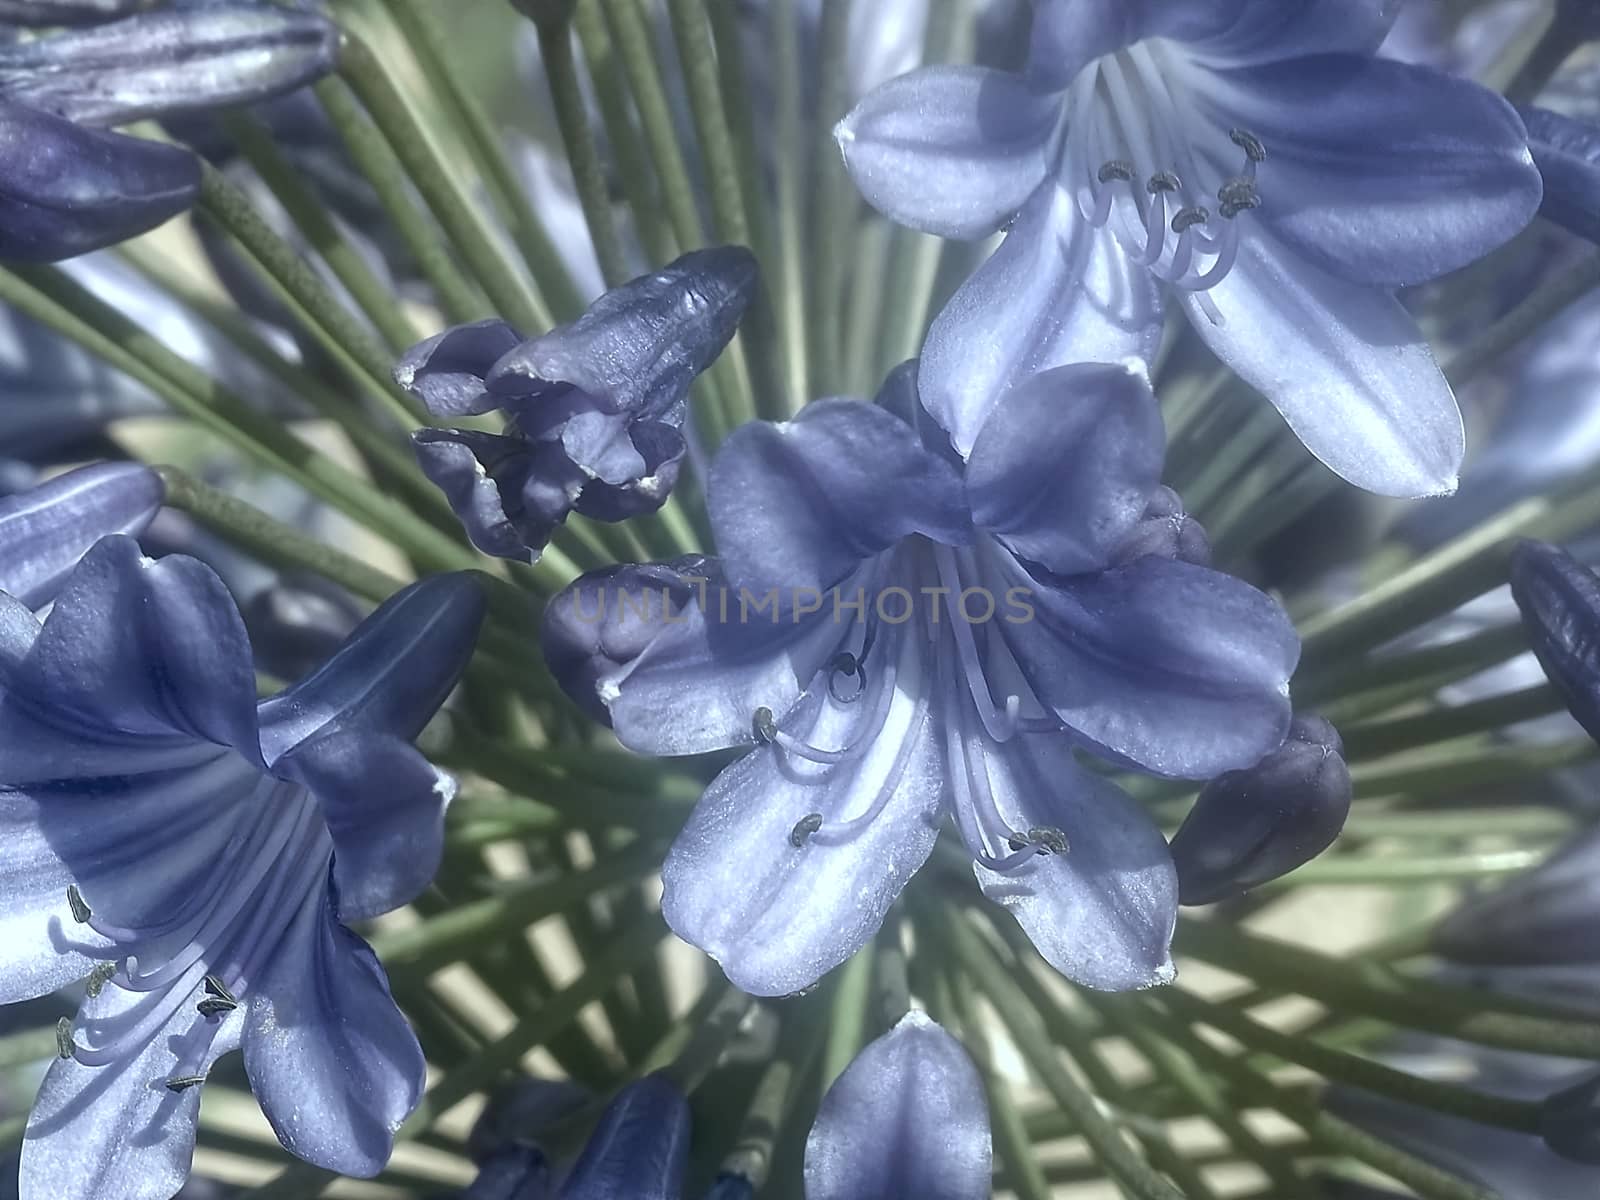 Wonderful blue blooming agapanthus flower by Stimmungsbilder